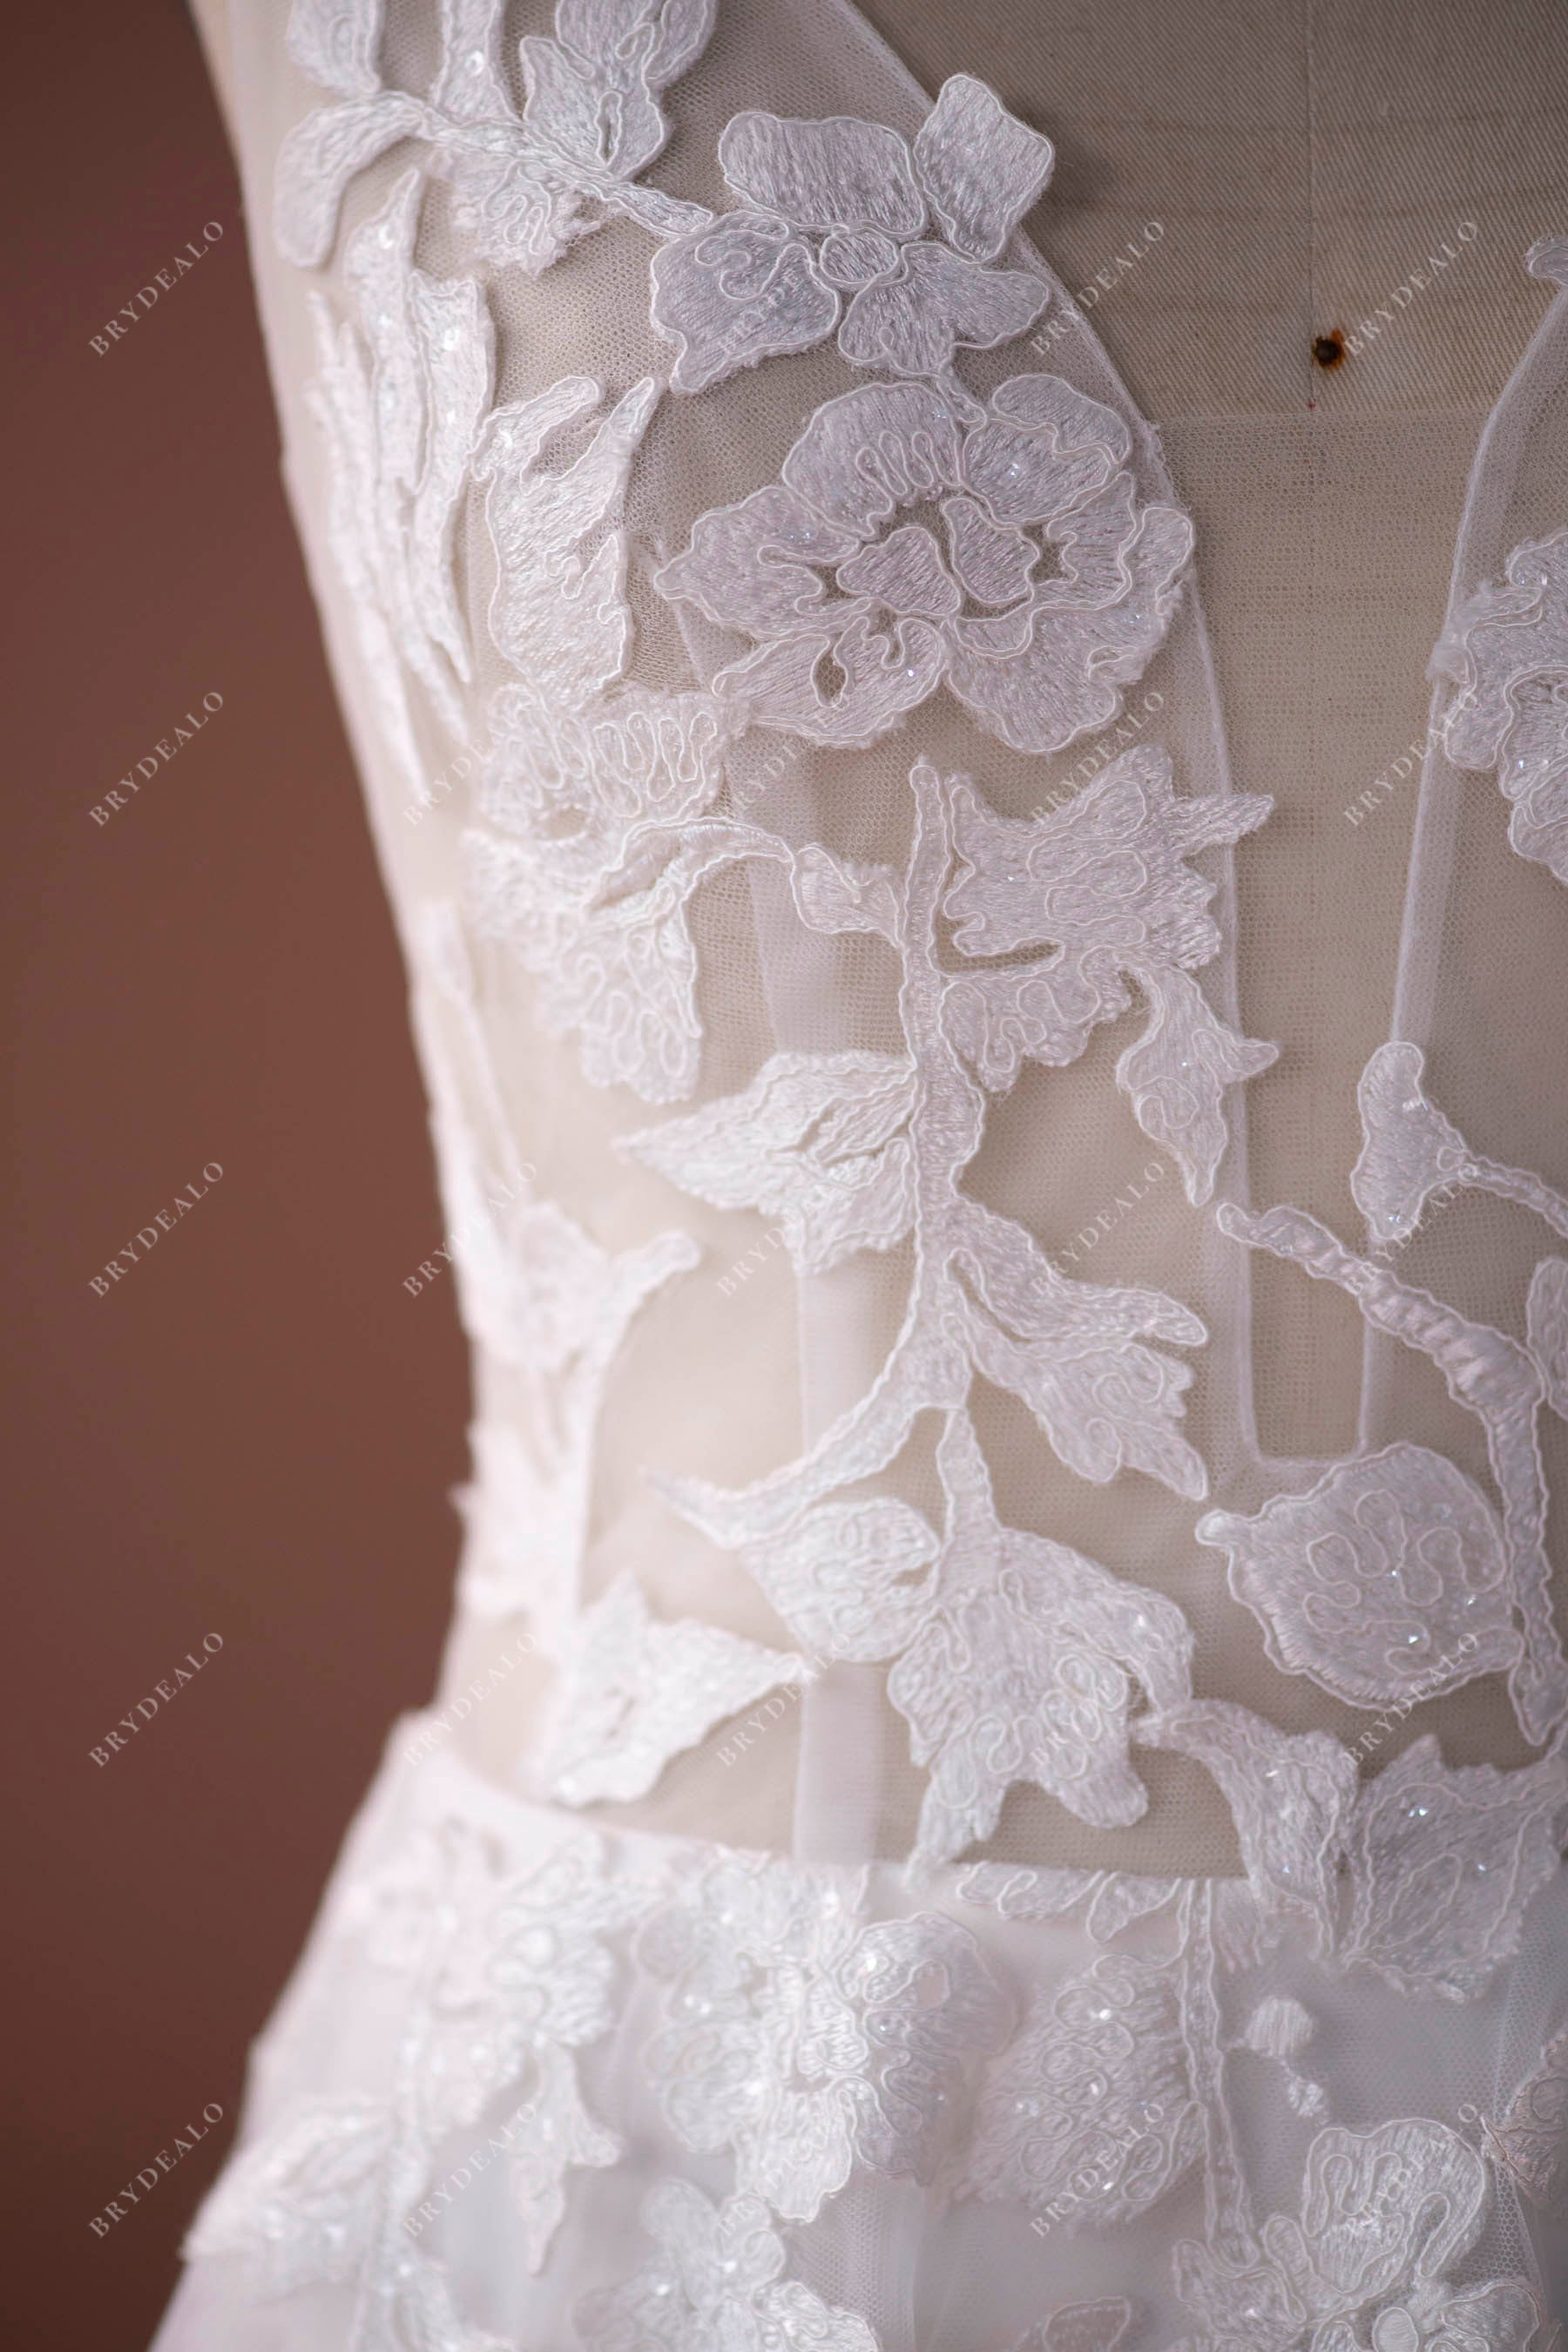 shimmery flower lace fall destination wedding dress